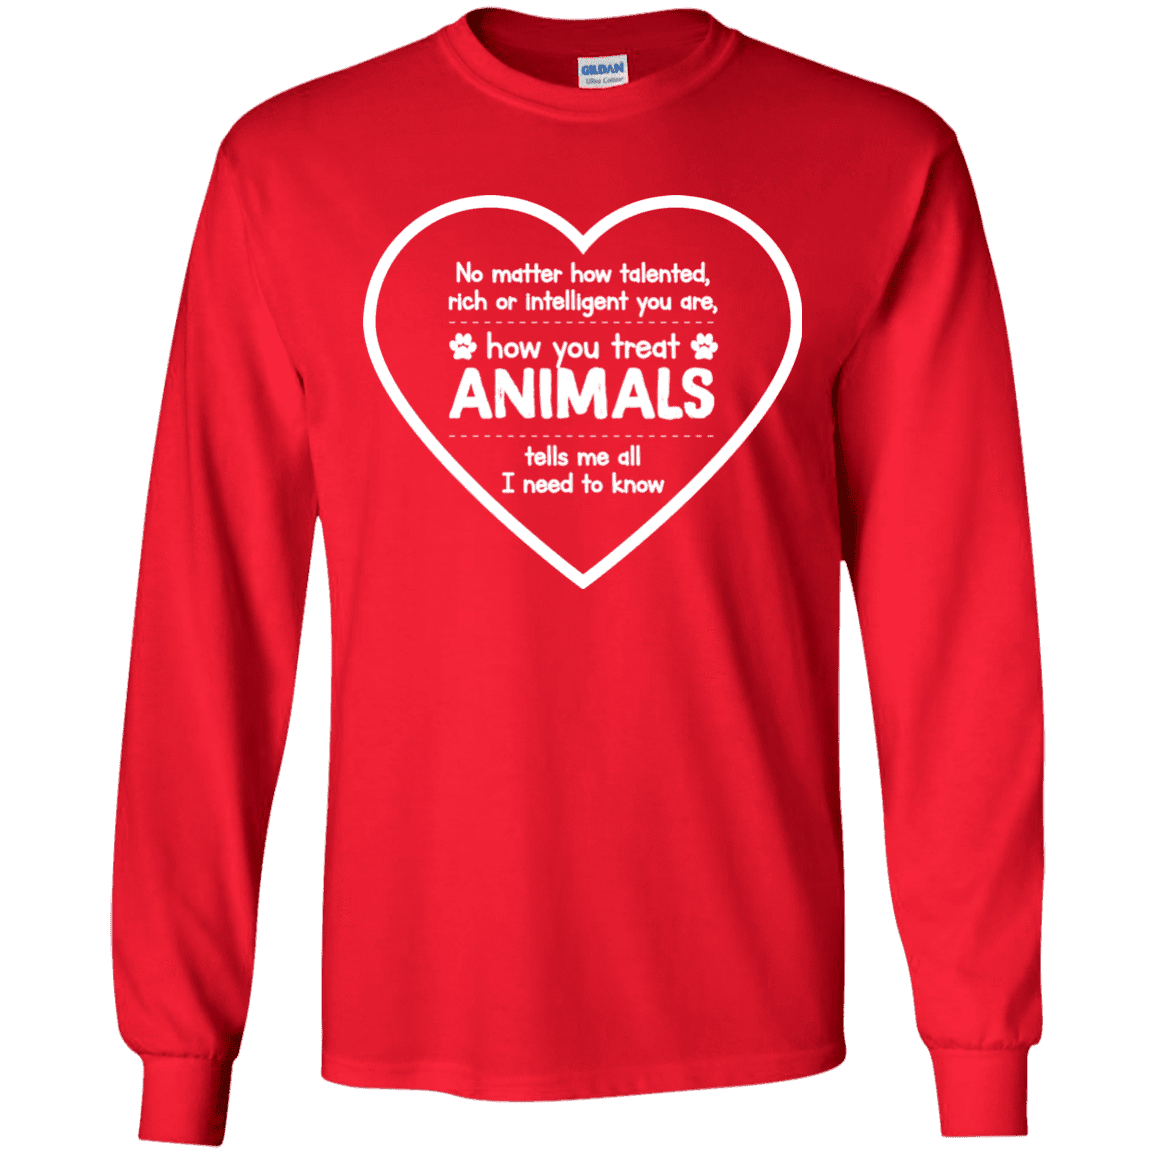 How You Treat Animals - Long Sleeve T Shirt.